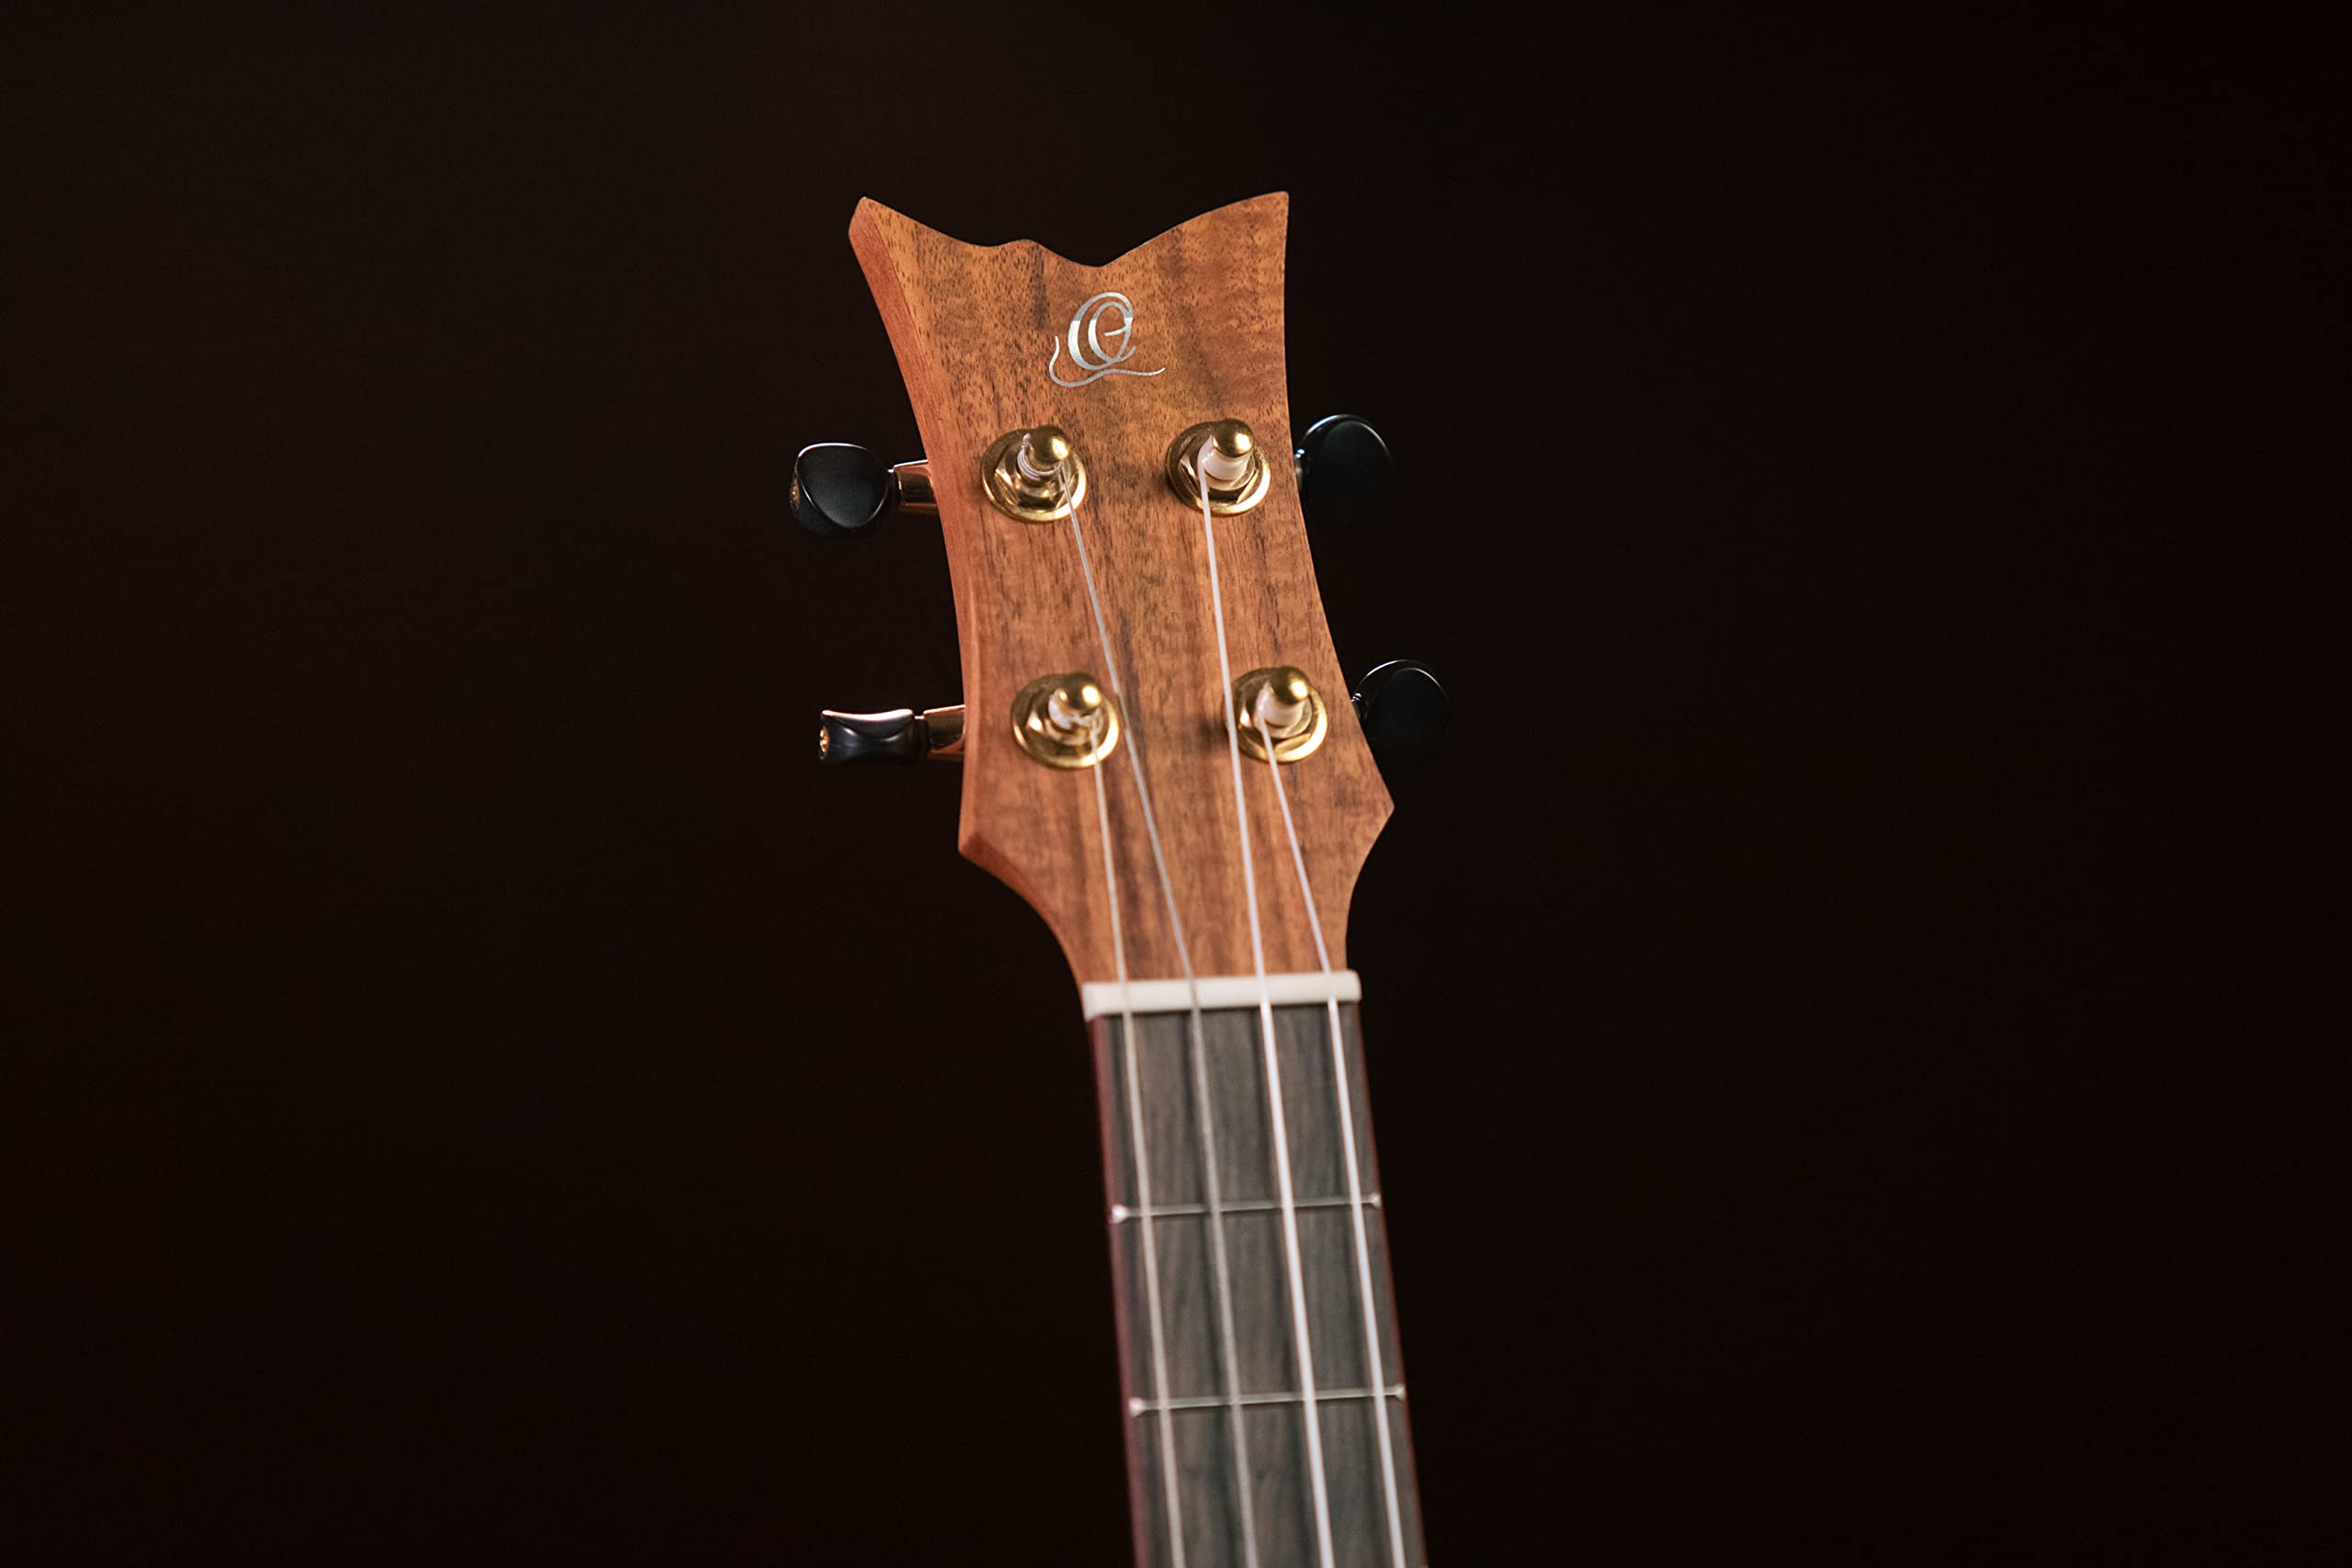 Amazon　Baritone　trên　4-String　Top　(RUACA-BA)　Mua　Right　w/Bag,　chính　Solid　Series　2023　Ortega　Guitars,　Giaonhan247　Mỹ　Timber　Ukulele　hãng